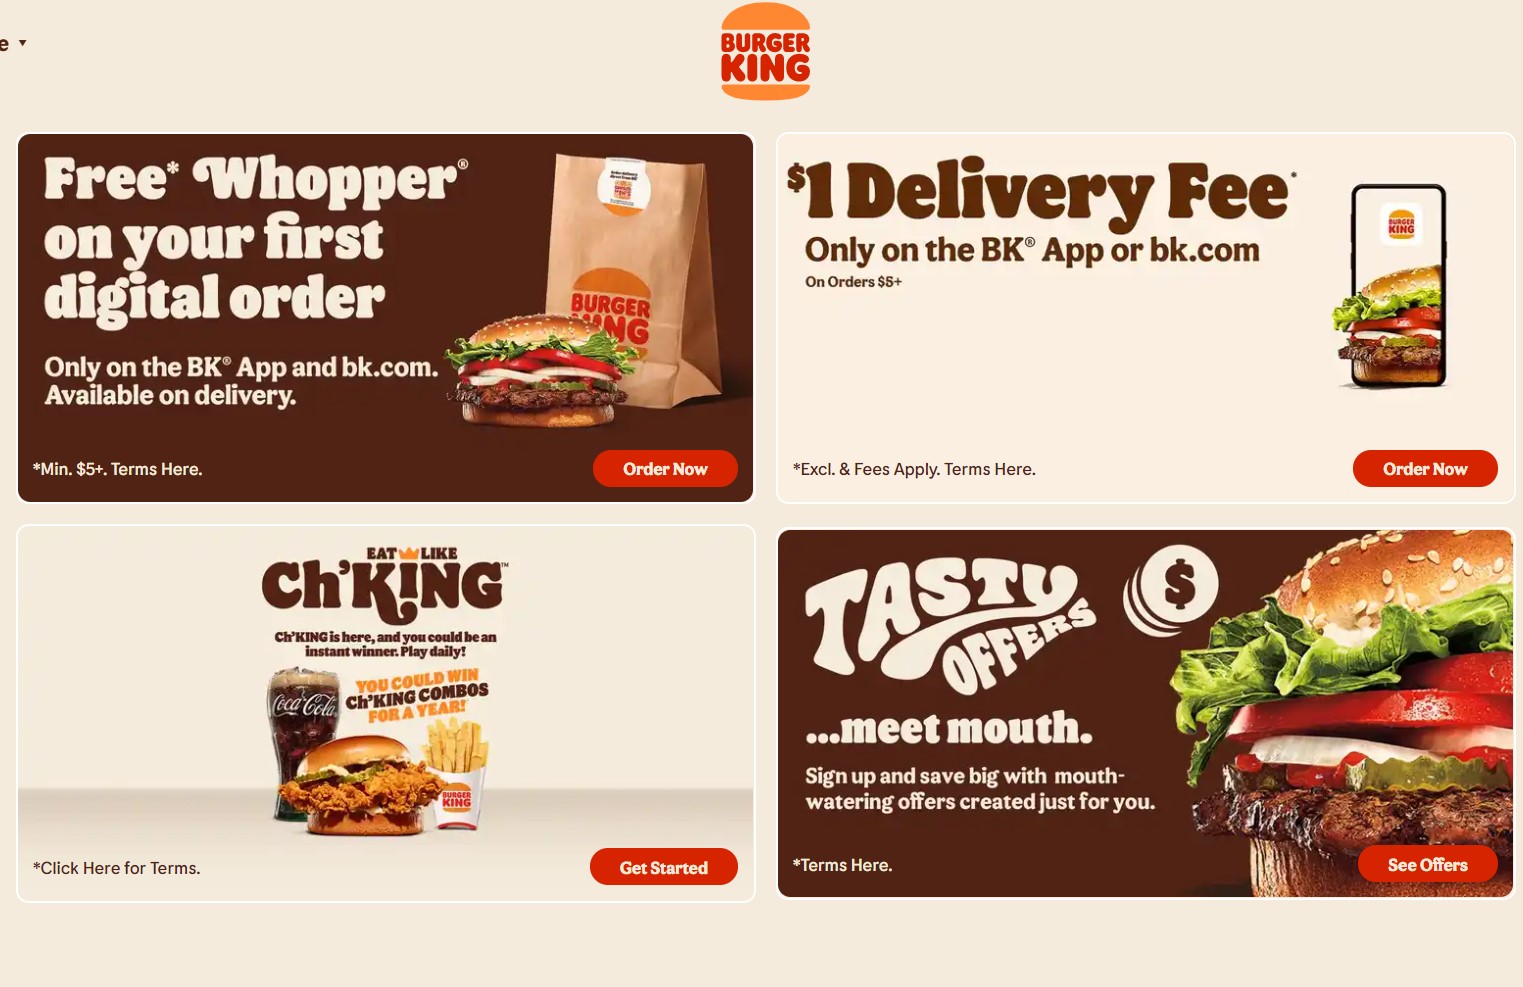 MYBKExperience Burger King Survey – Win a Free whopper Burger